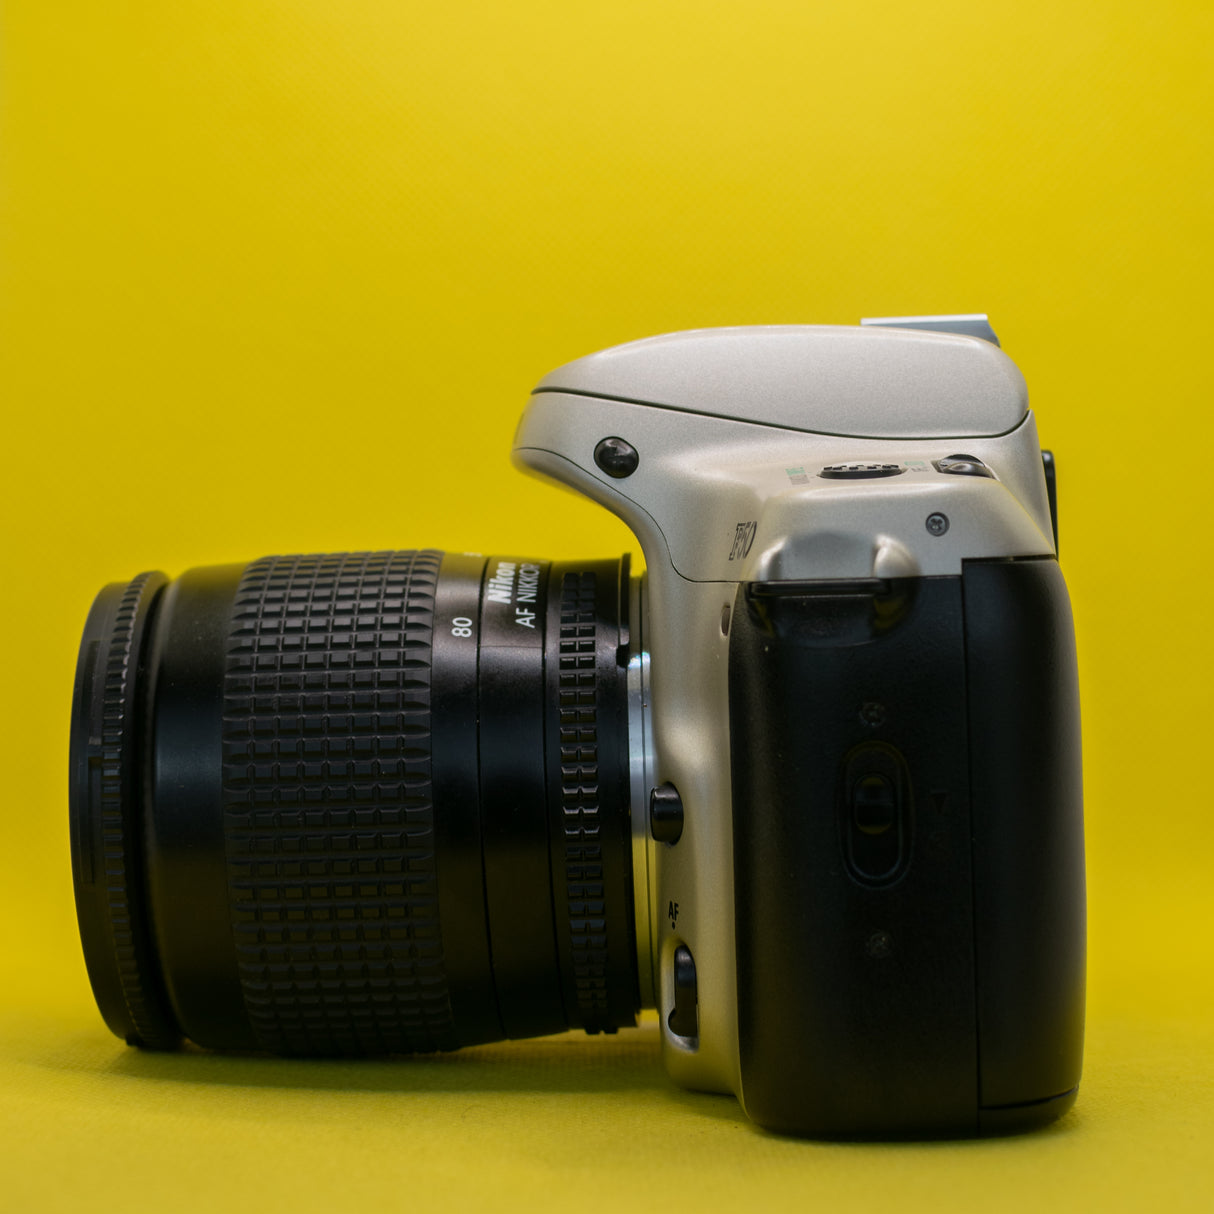 Nikon F50 - Fotocamera classica reflex 35 mm